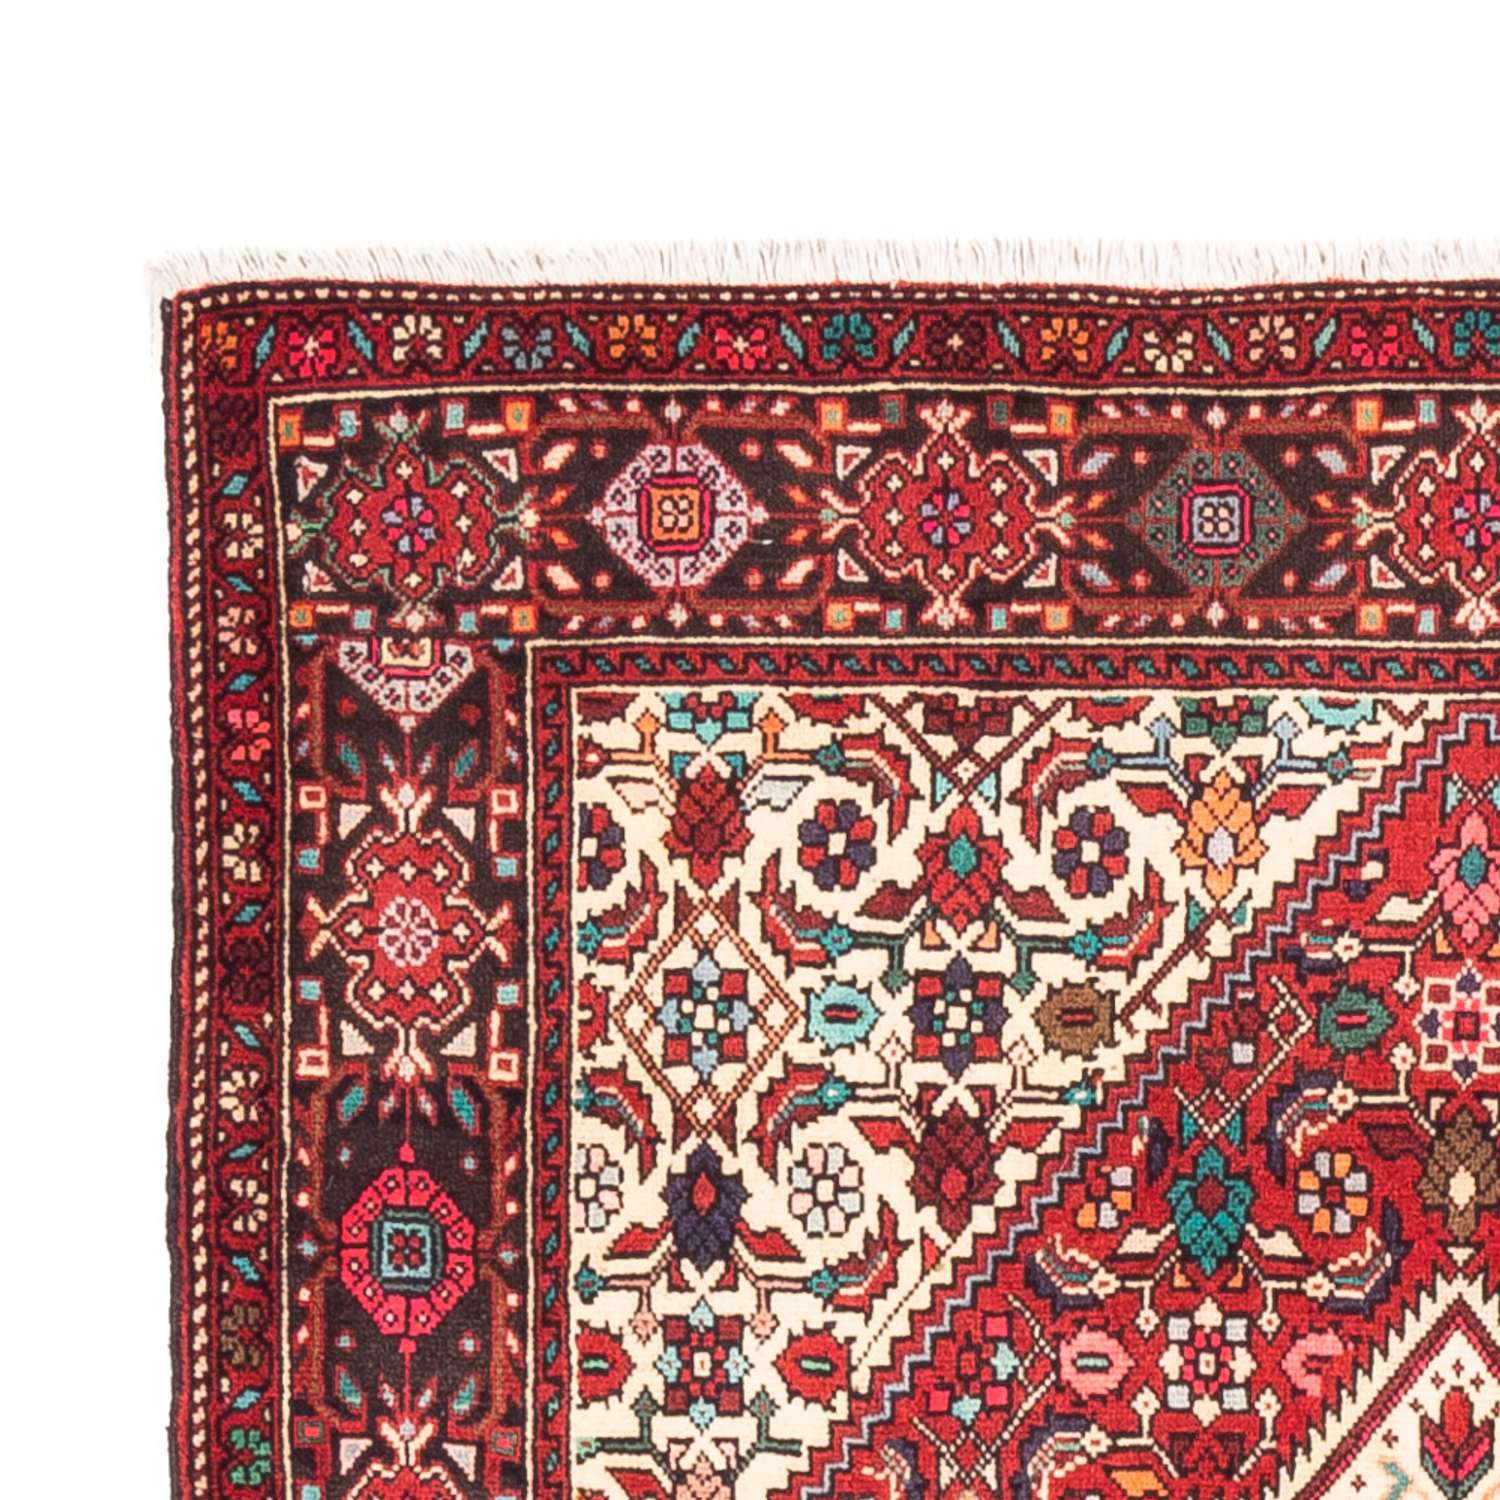 Persisk matta - Nomadic - 152 x 102 cm - röd